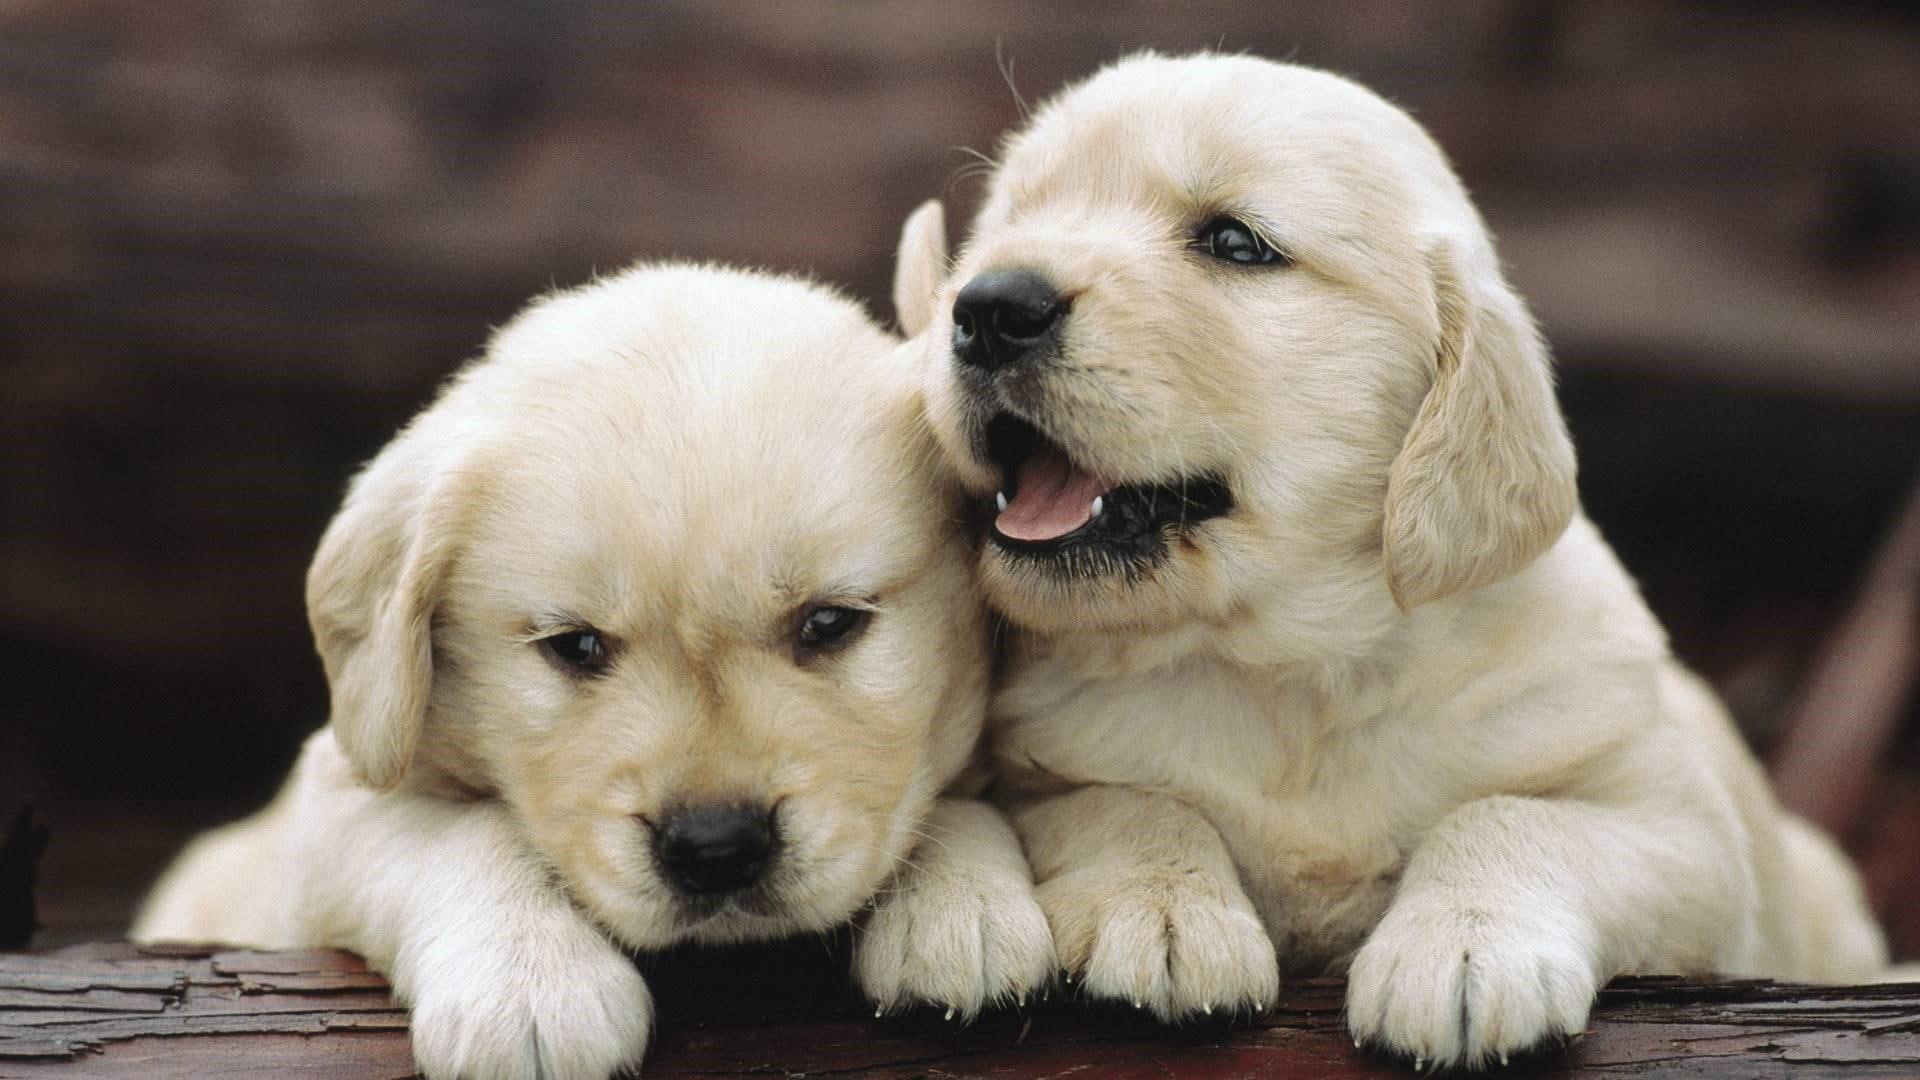 Cute, doggie, dogs, puppies wallpaper